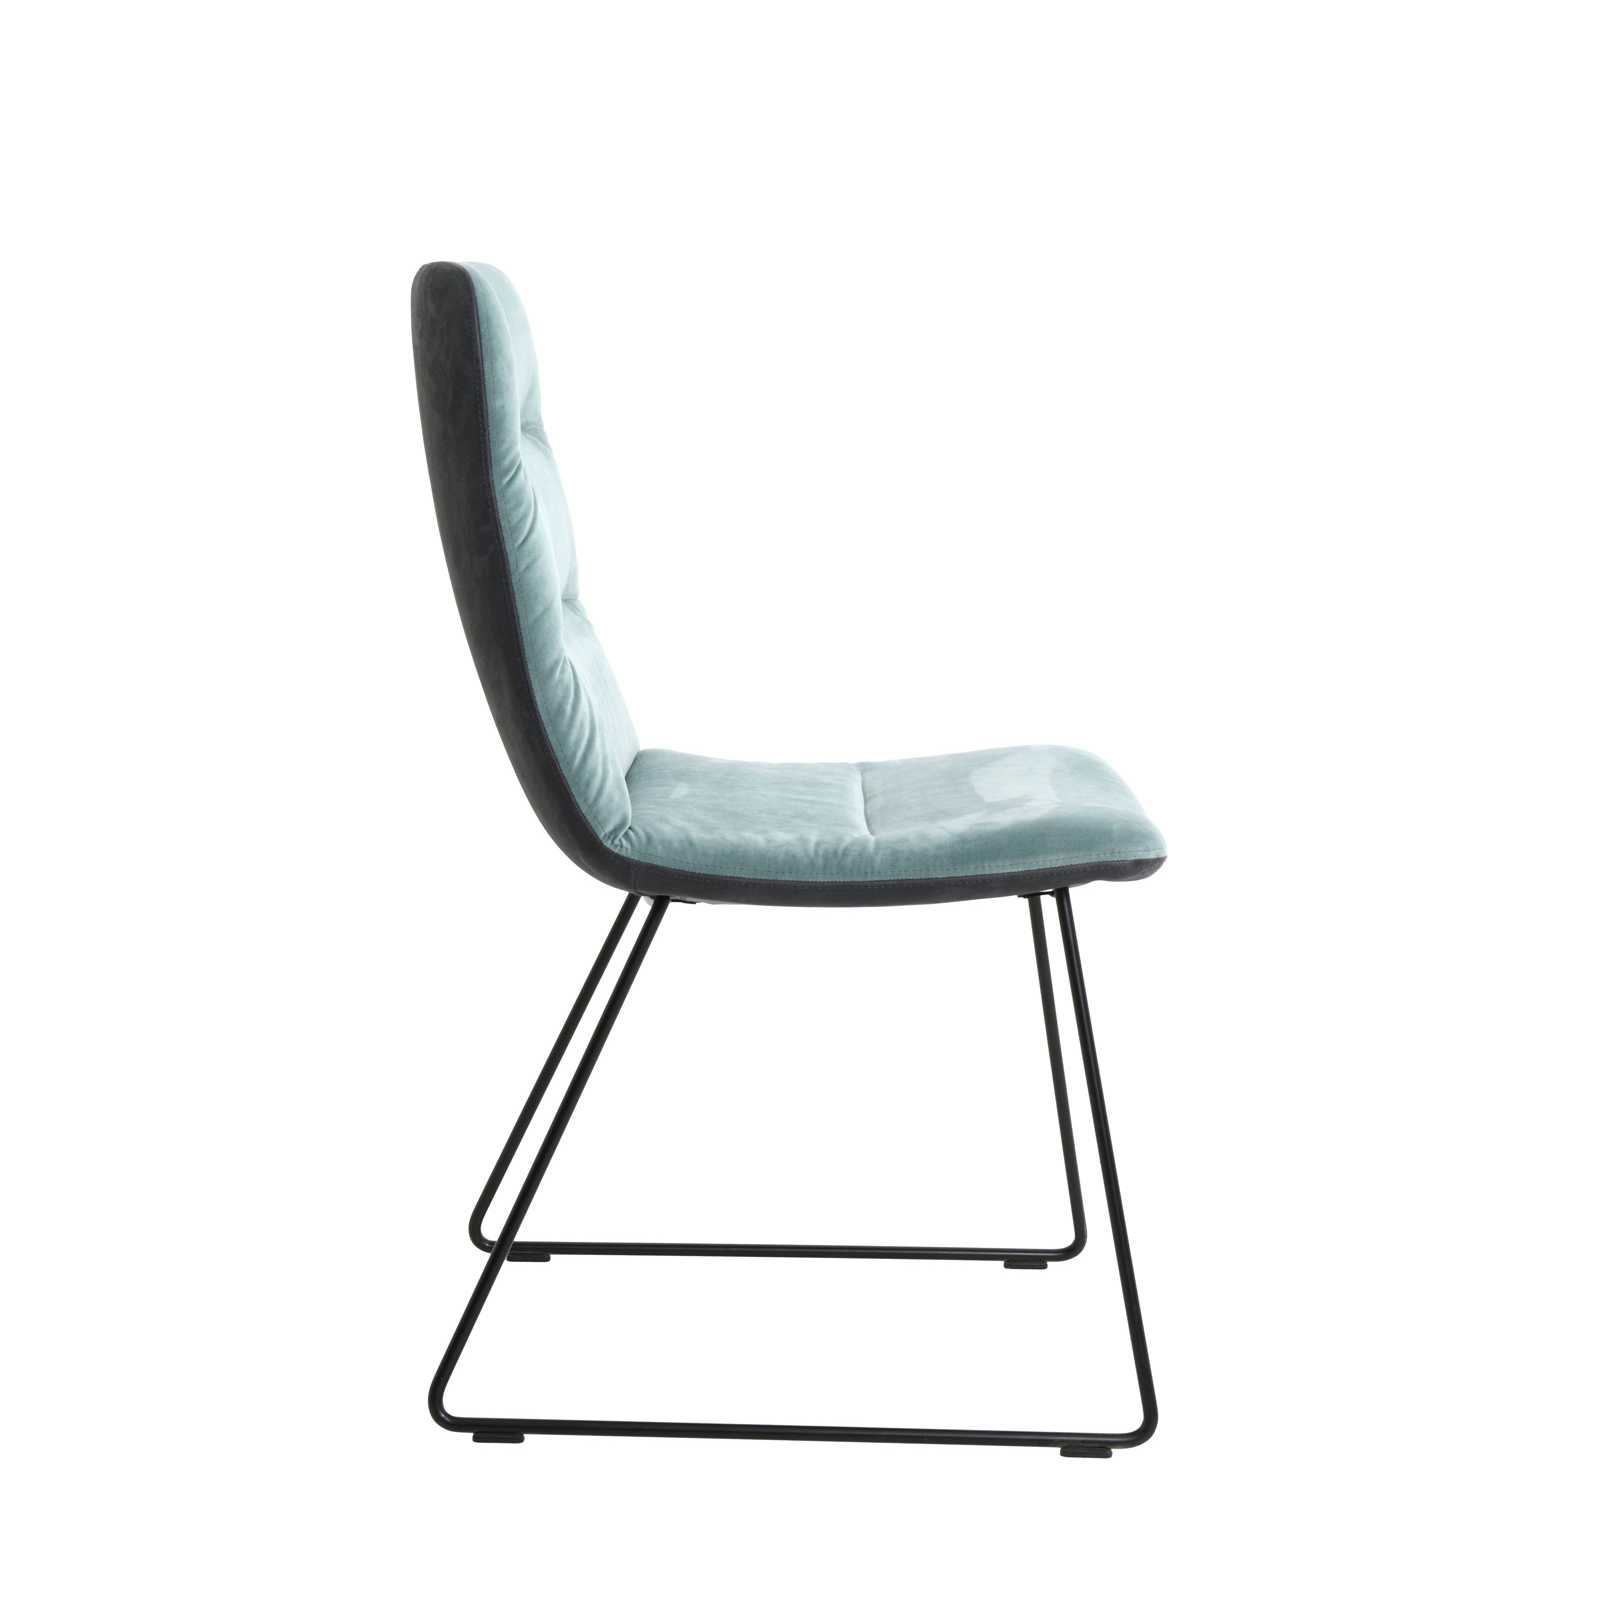 KFF ARVA LIGHT chair with or without armrests designed by KFF | dining | ARVA LIGHT Stuhl mit oder ohne Armlehnen designed by KFF